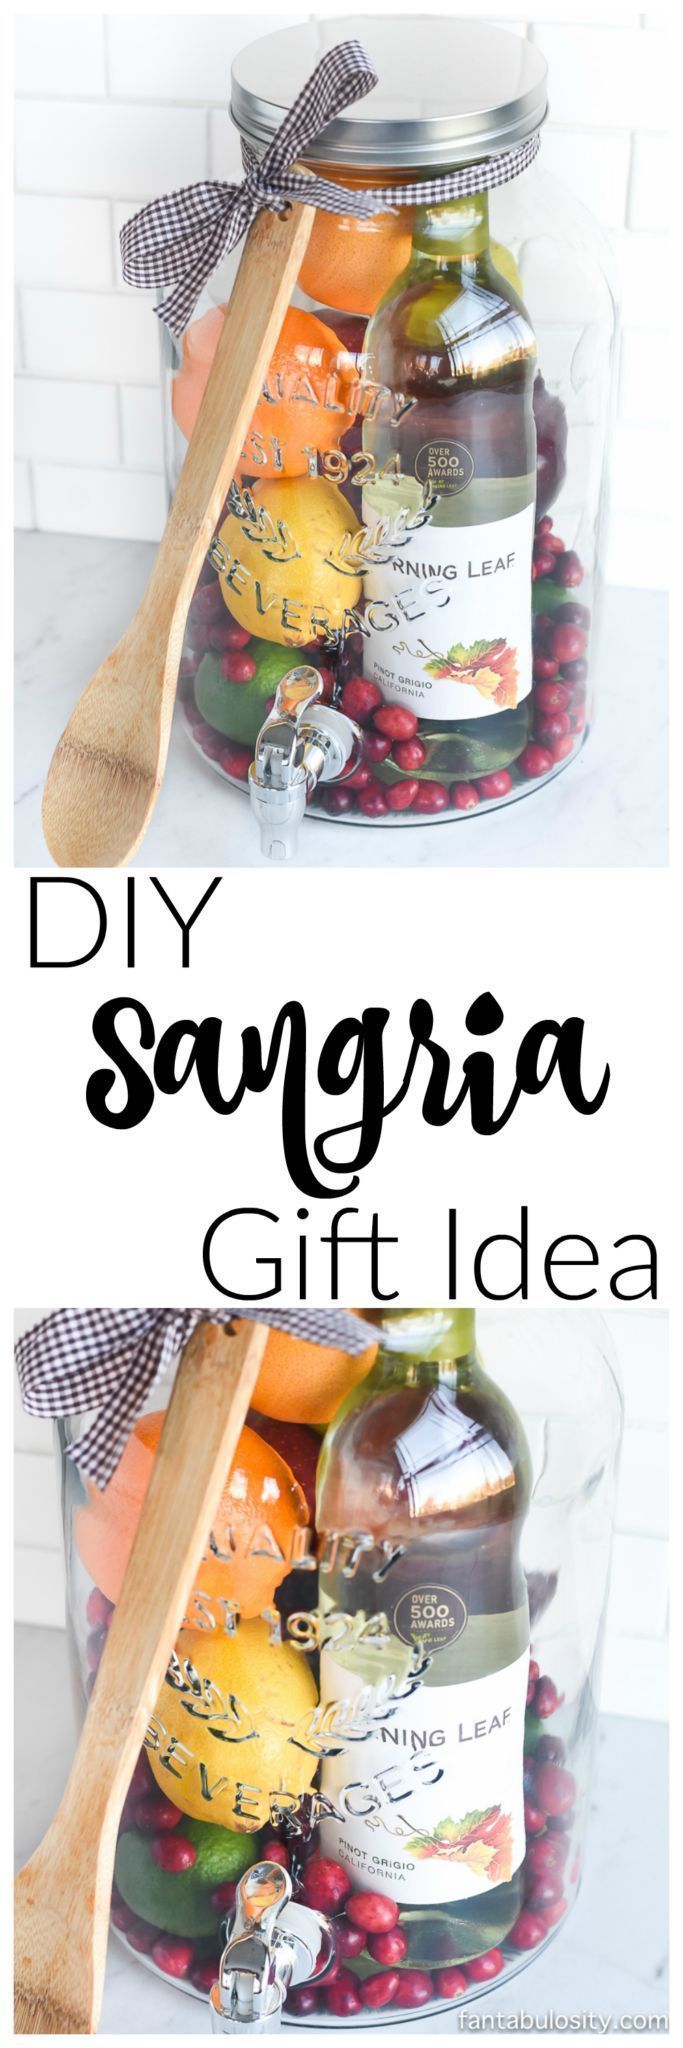 DIY Gift Idea: Sangria Kit - Great for Friends, Housewarming & More! - DIY Gift Idea: Sangria Kit - Great for Friends, Housewarming & More! -   17 diy Gifts for women ideas